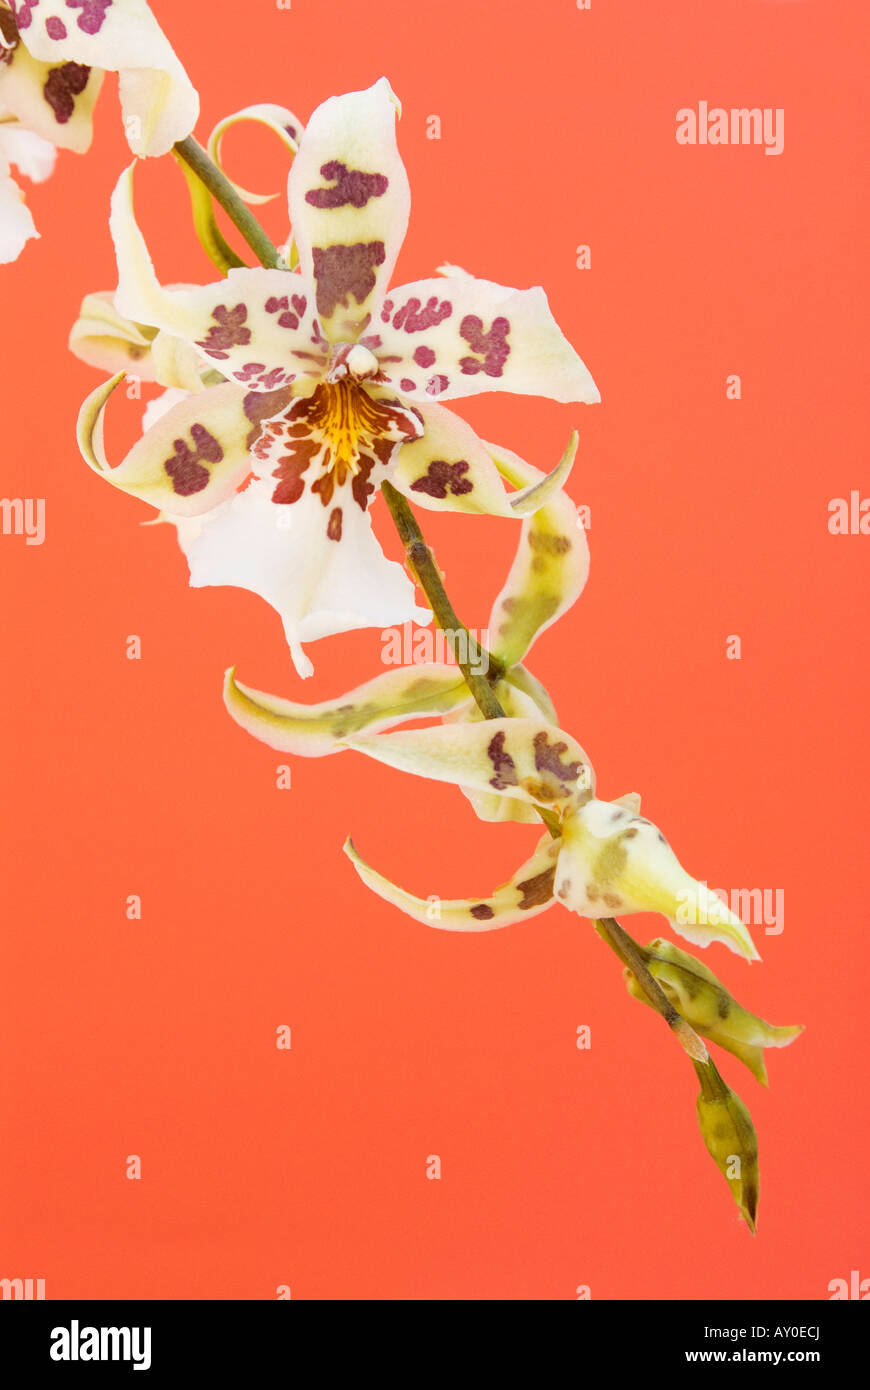 Oncidium Orchid flower on coral orange background Stock Photo